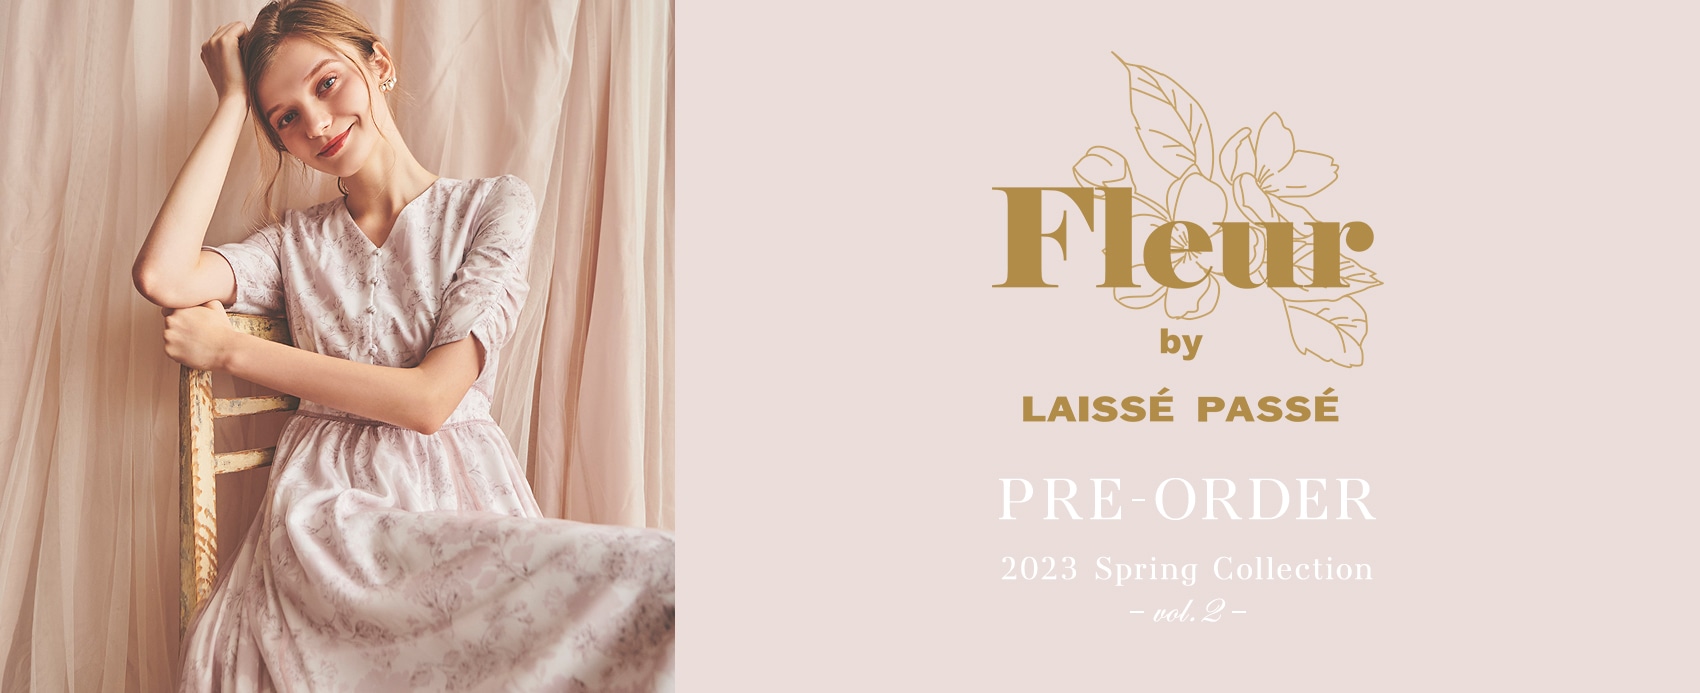 Fleur by LAISSE PASSE PRE-ORDER 2023 Spring Collection -vol.2-